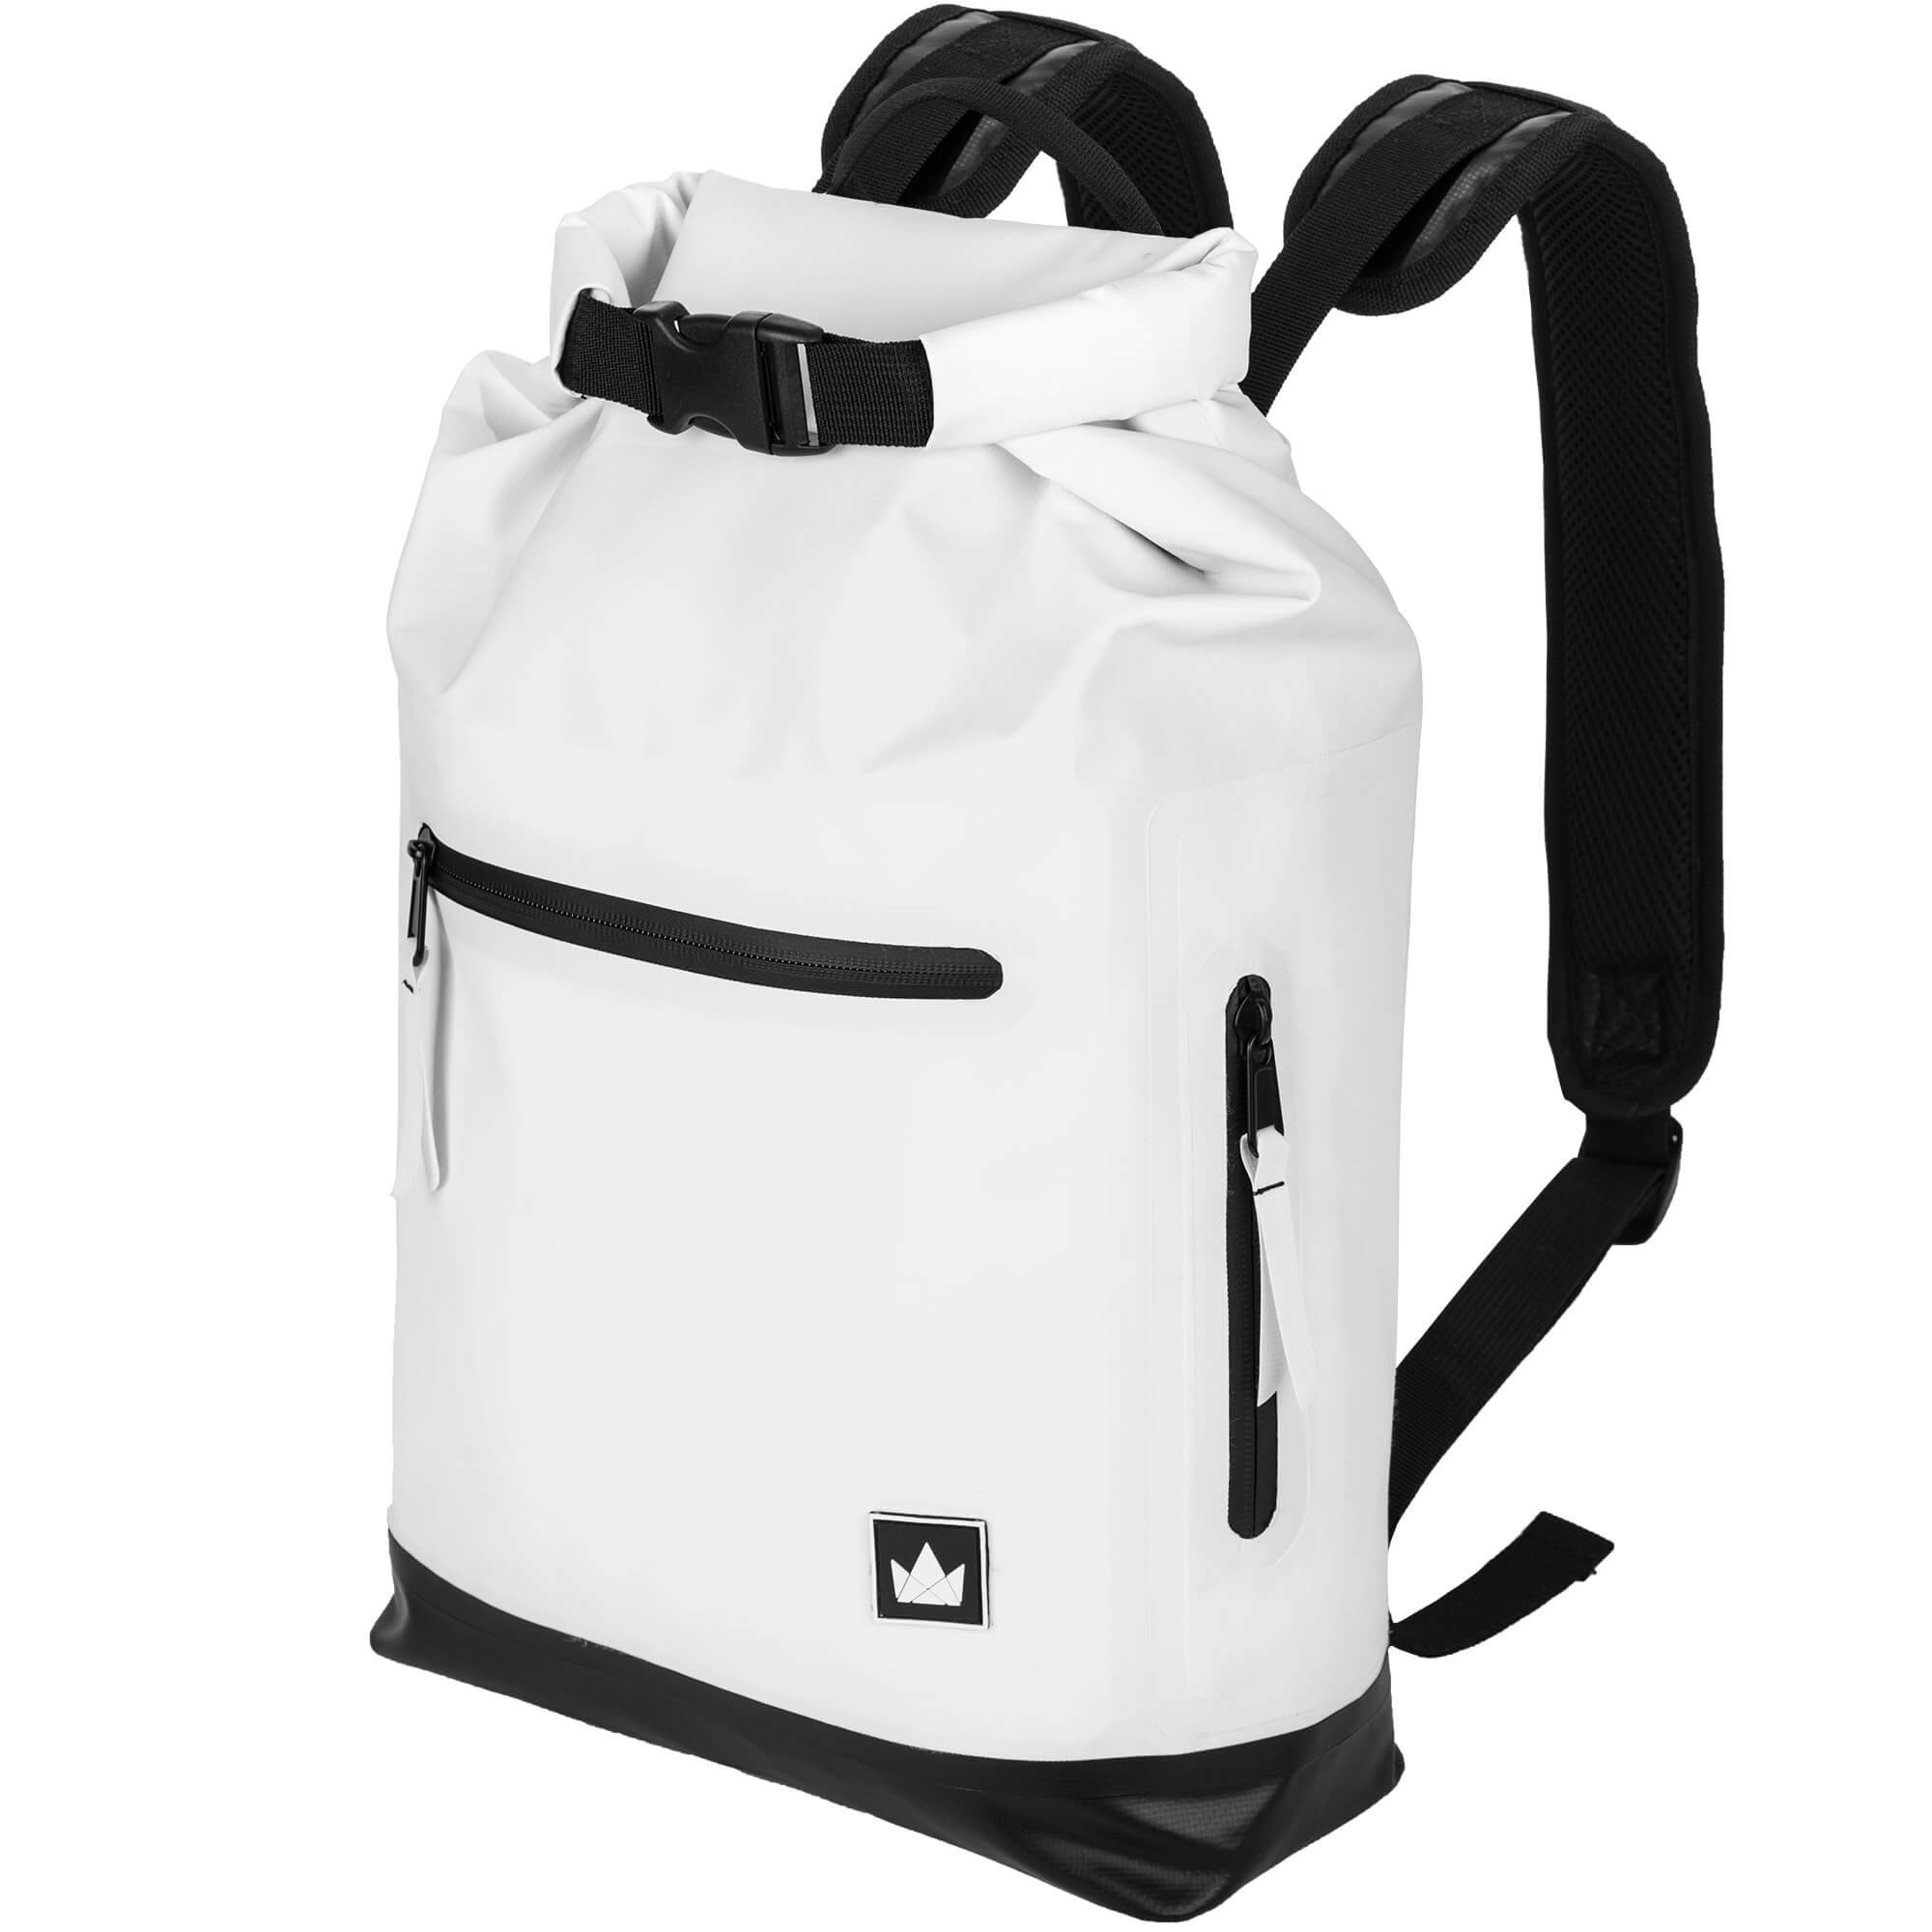 Waterproof Laptop Backpacks Toughgadget